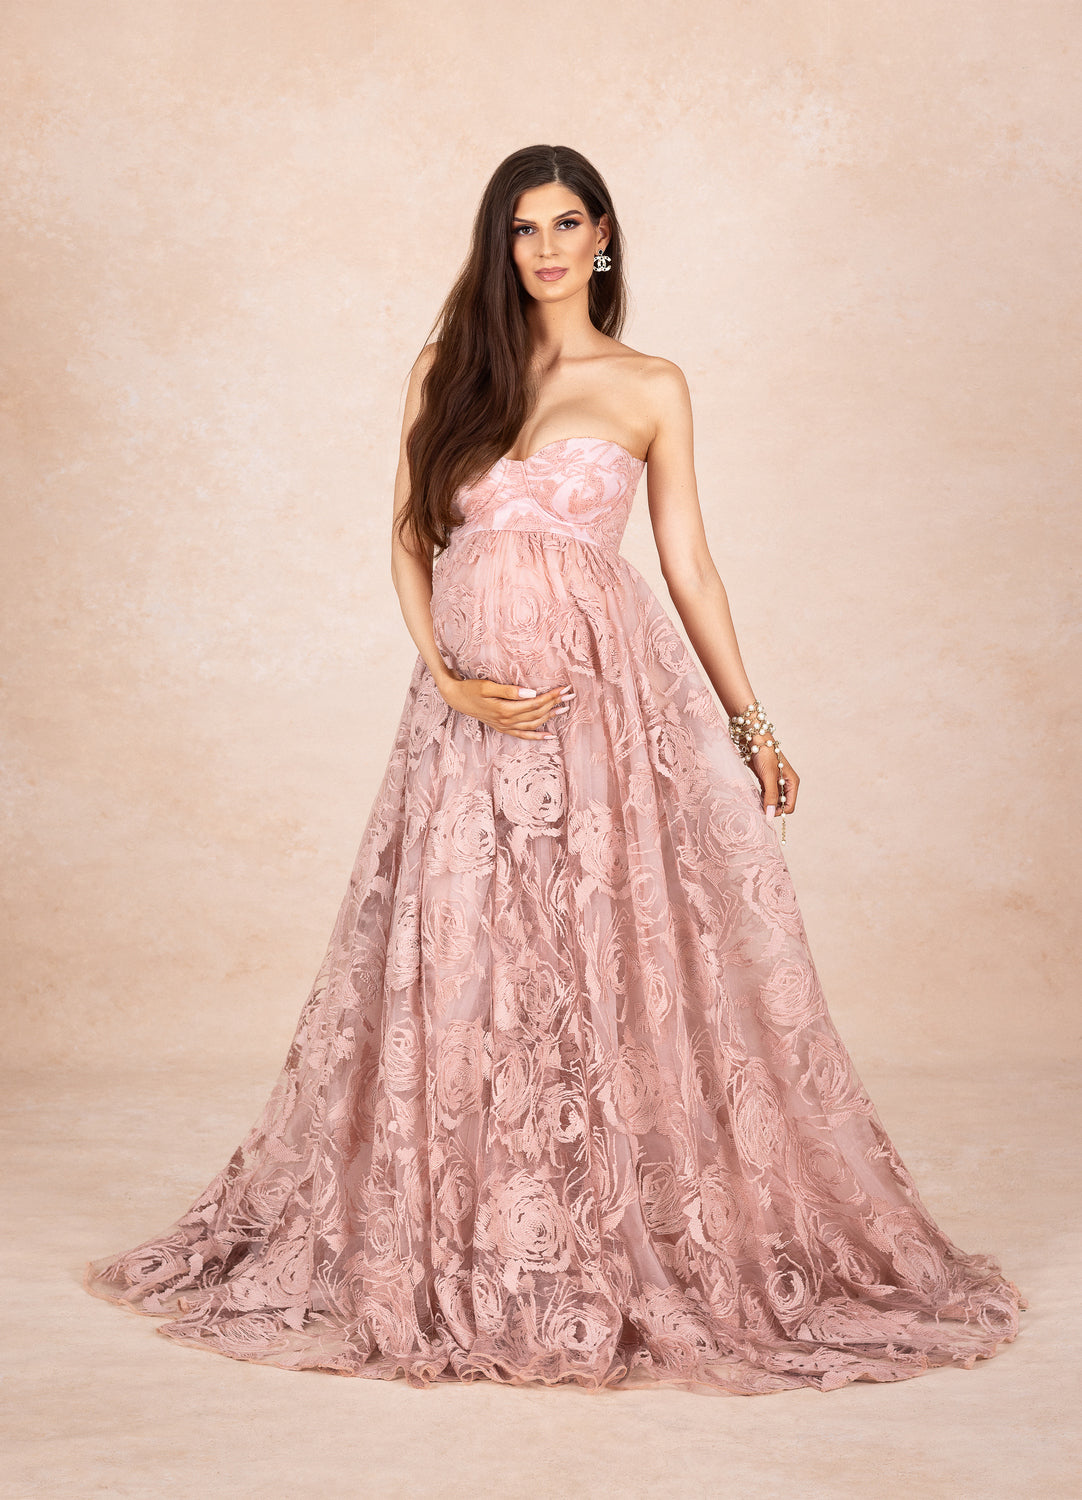 Pinkstar Maternity gown rental – Pinkstar Maternity Couture